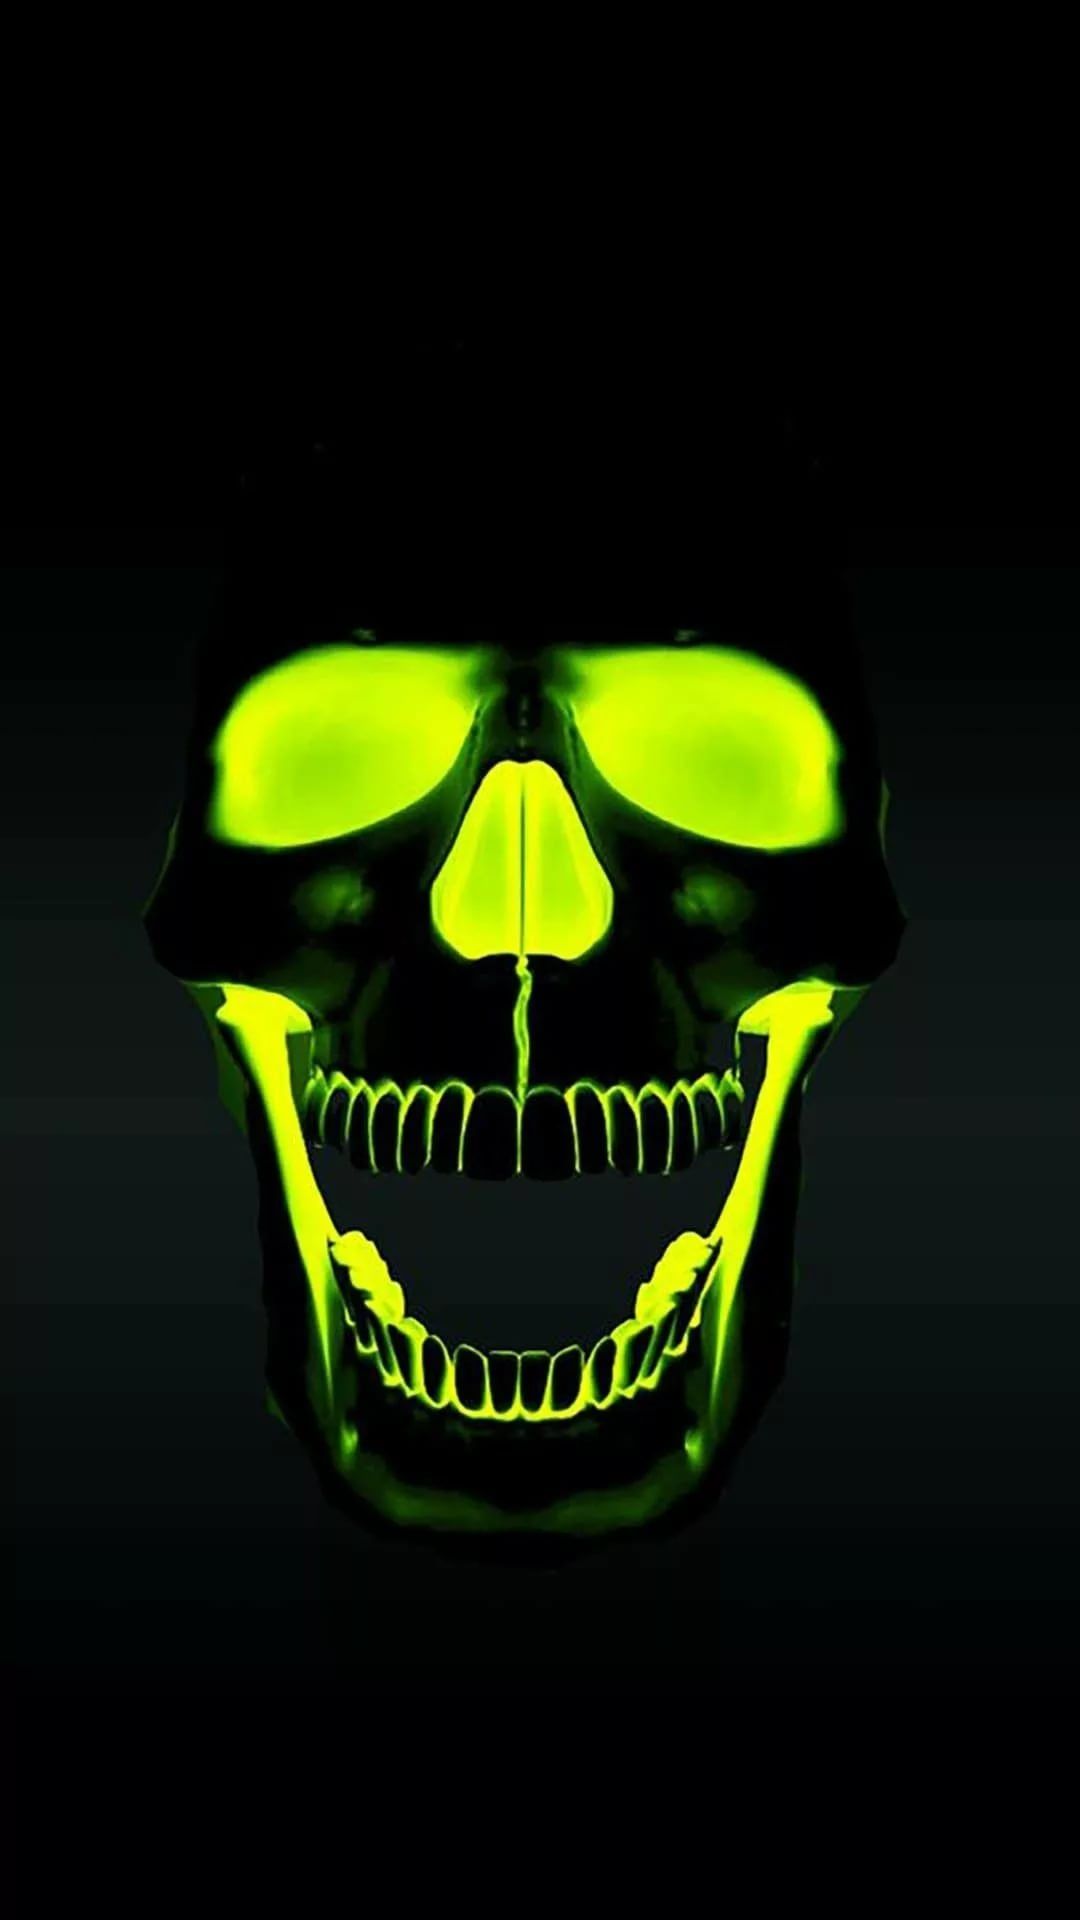 Cool Skull wallpaper iPhone